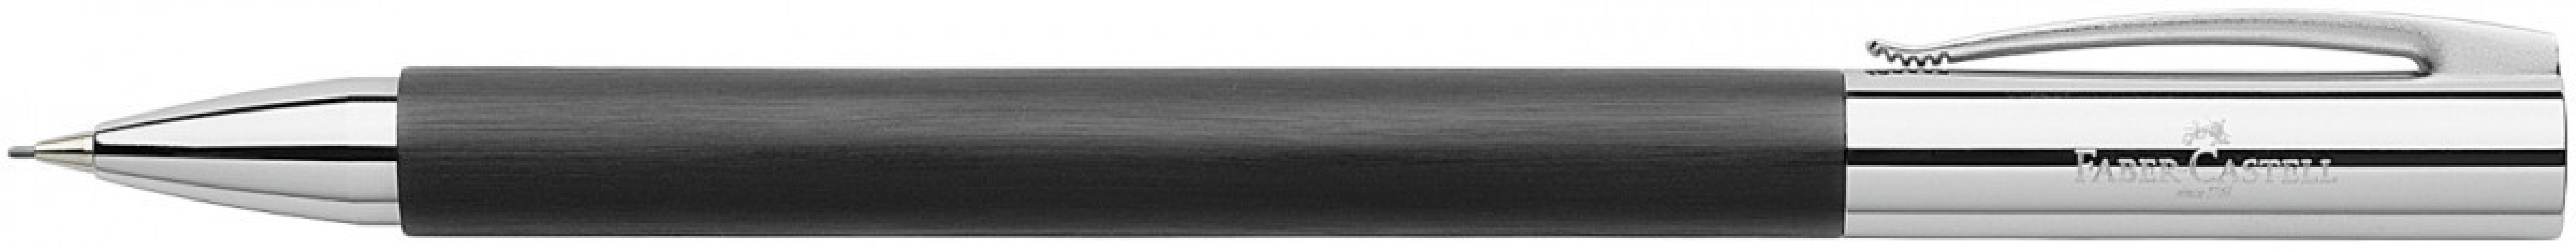 Faber Castell Ambition black 138130 mechanical pencil